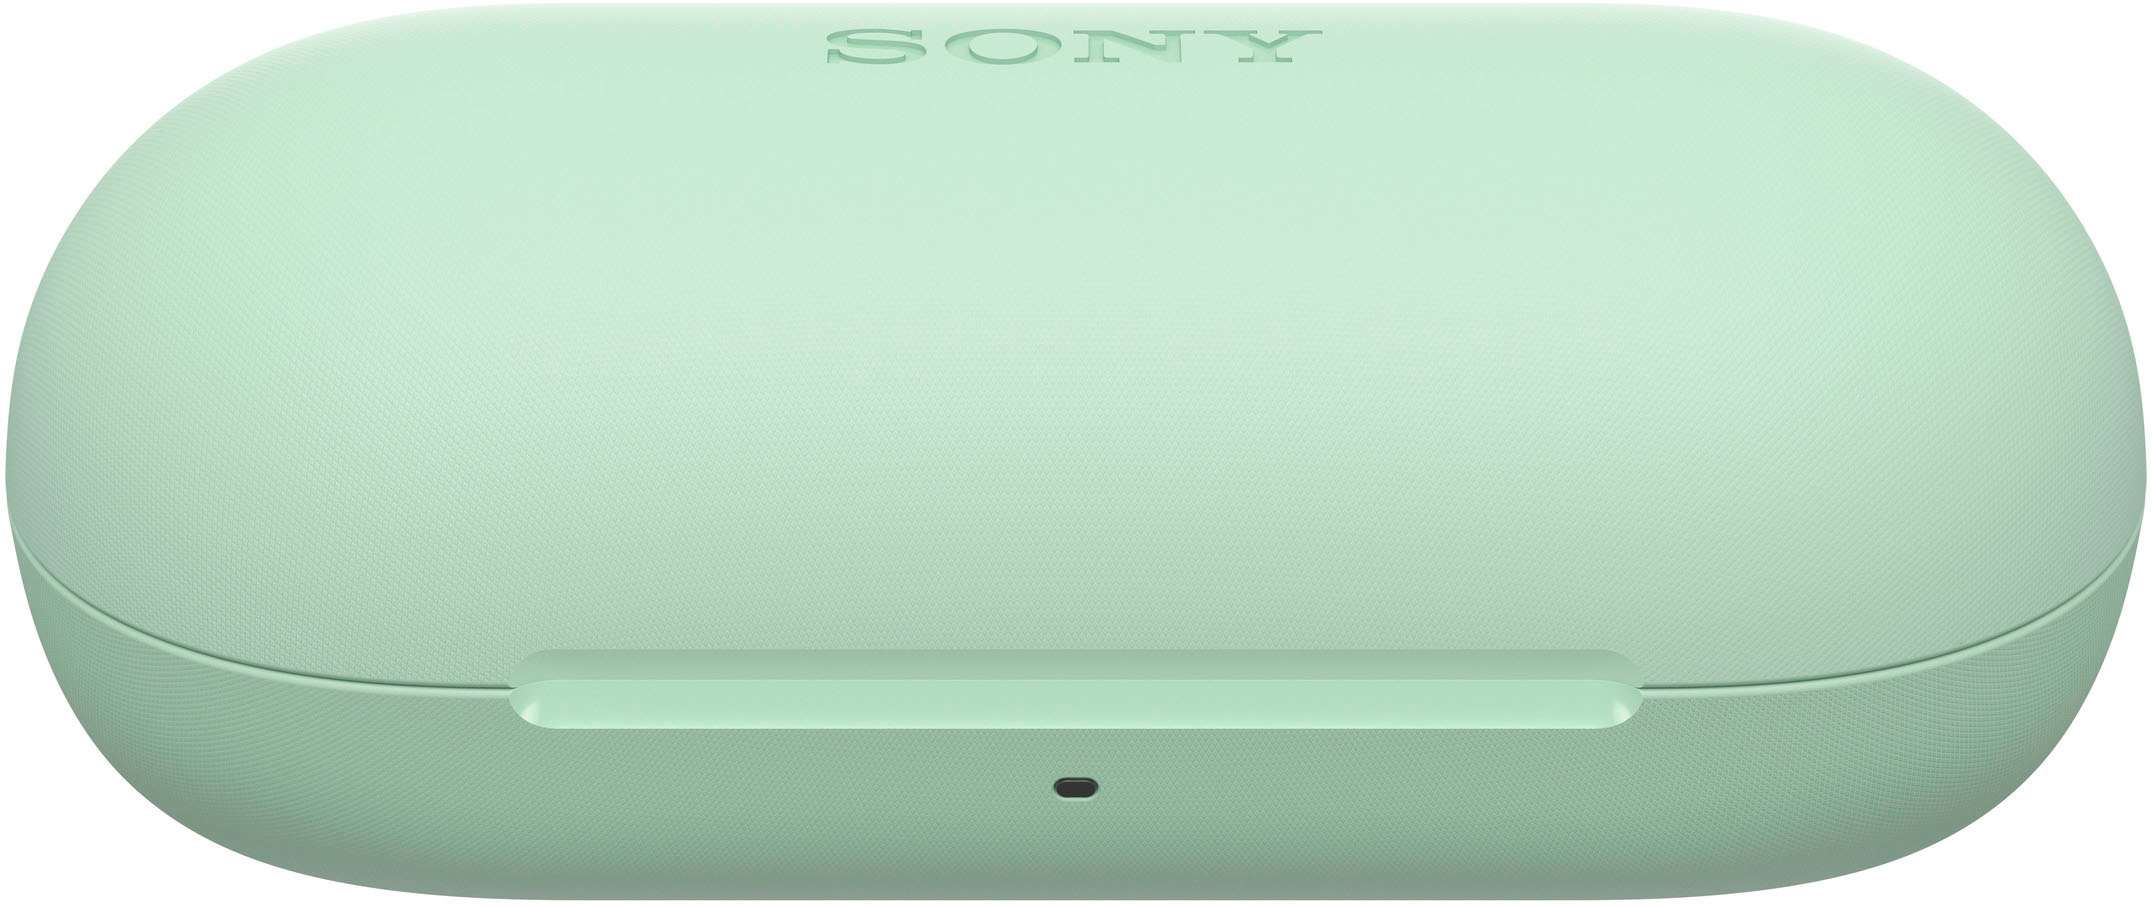 SaharaCase Anti-Slip Silicone Case for Sony WF-C700N Headphones Black  HP00116 - Best Buy